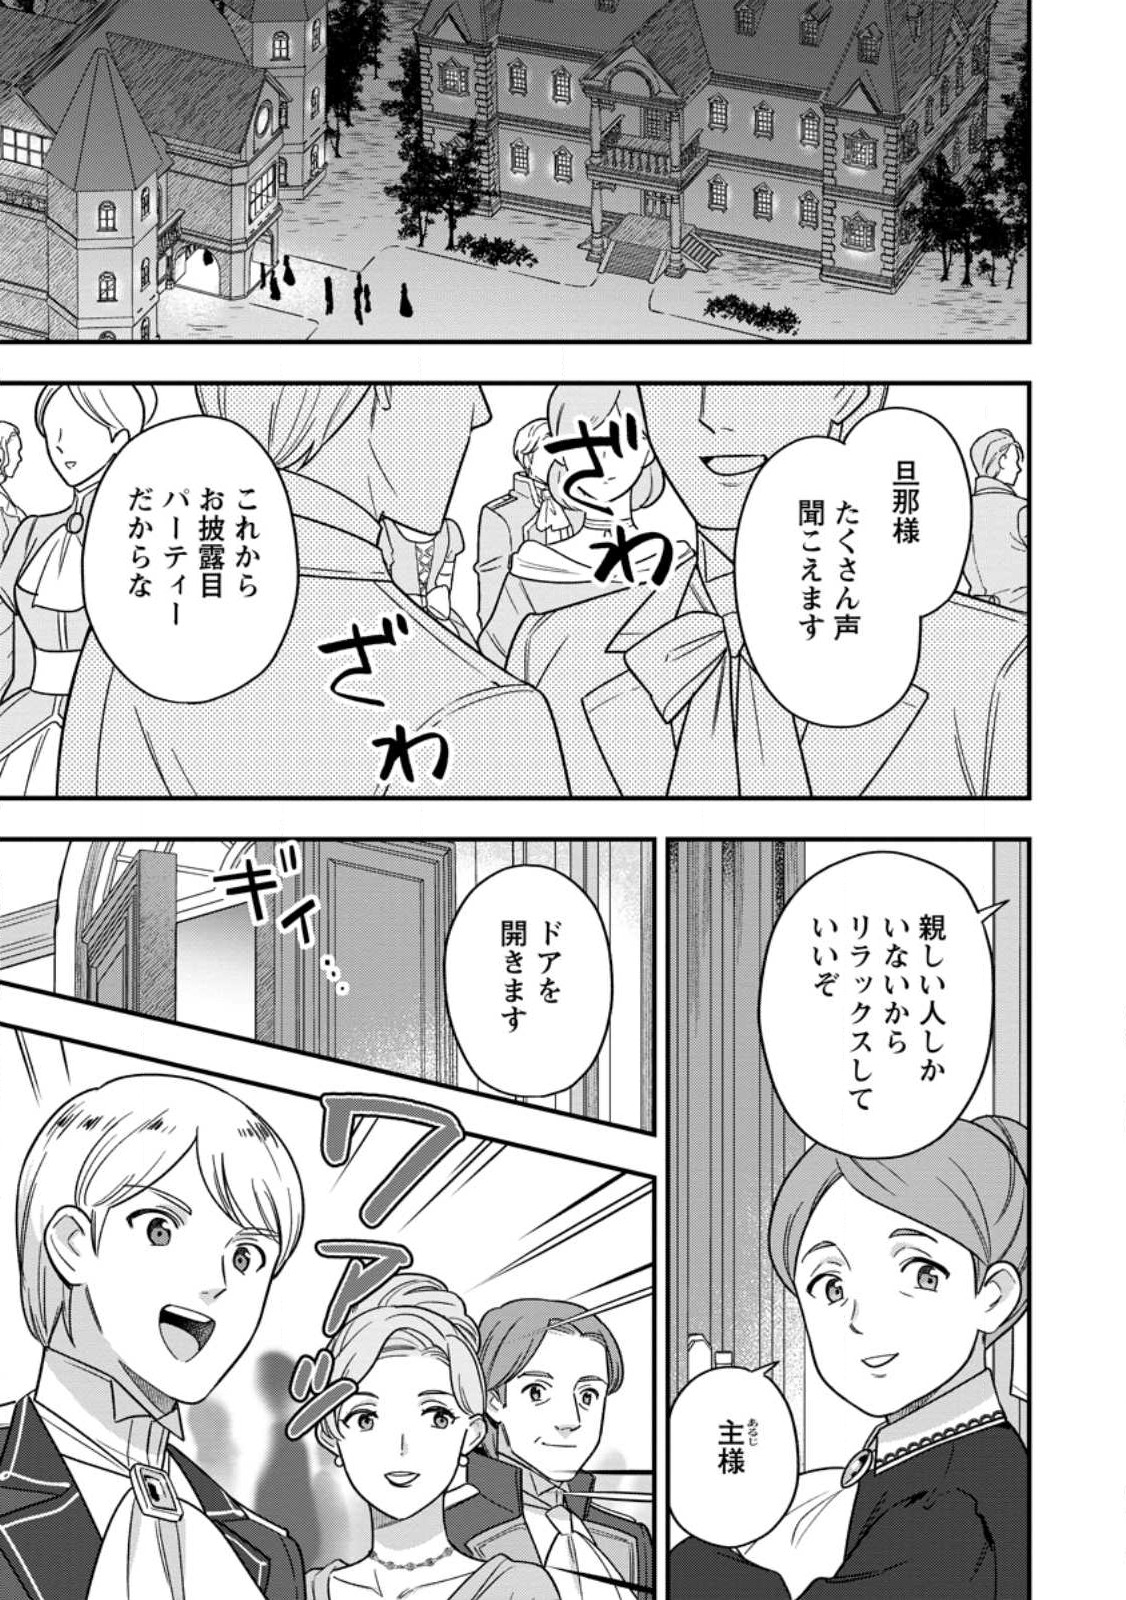 Aisanai to Iwaremashite mo - Chapter 10.3 - Page 3